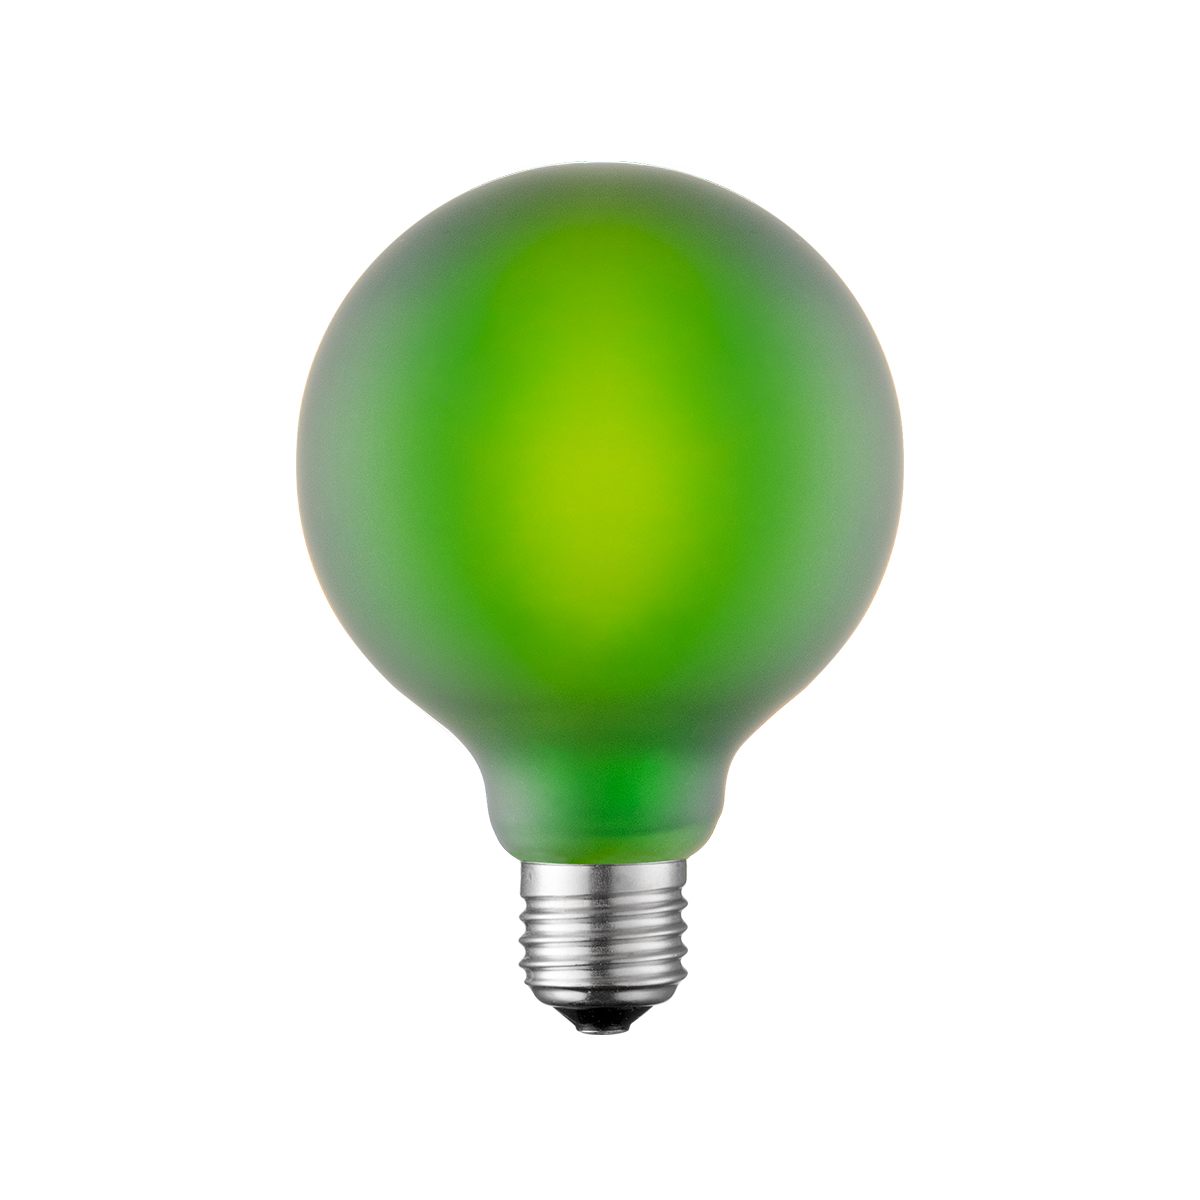 Tangla lighting - TLB-9005-04GN - LED Light Bulb Single Spiral filament - G125 4W green opal - non dimmable - E27